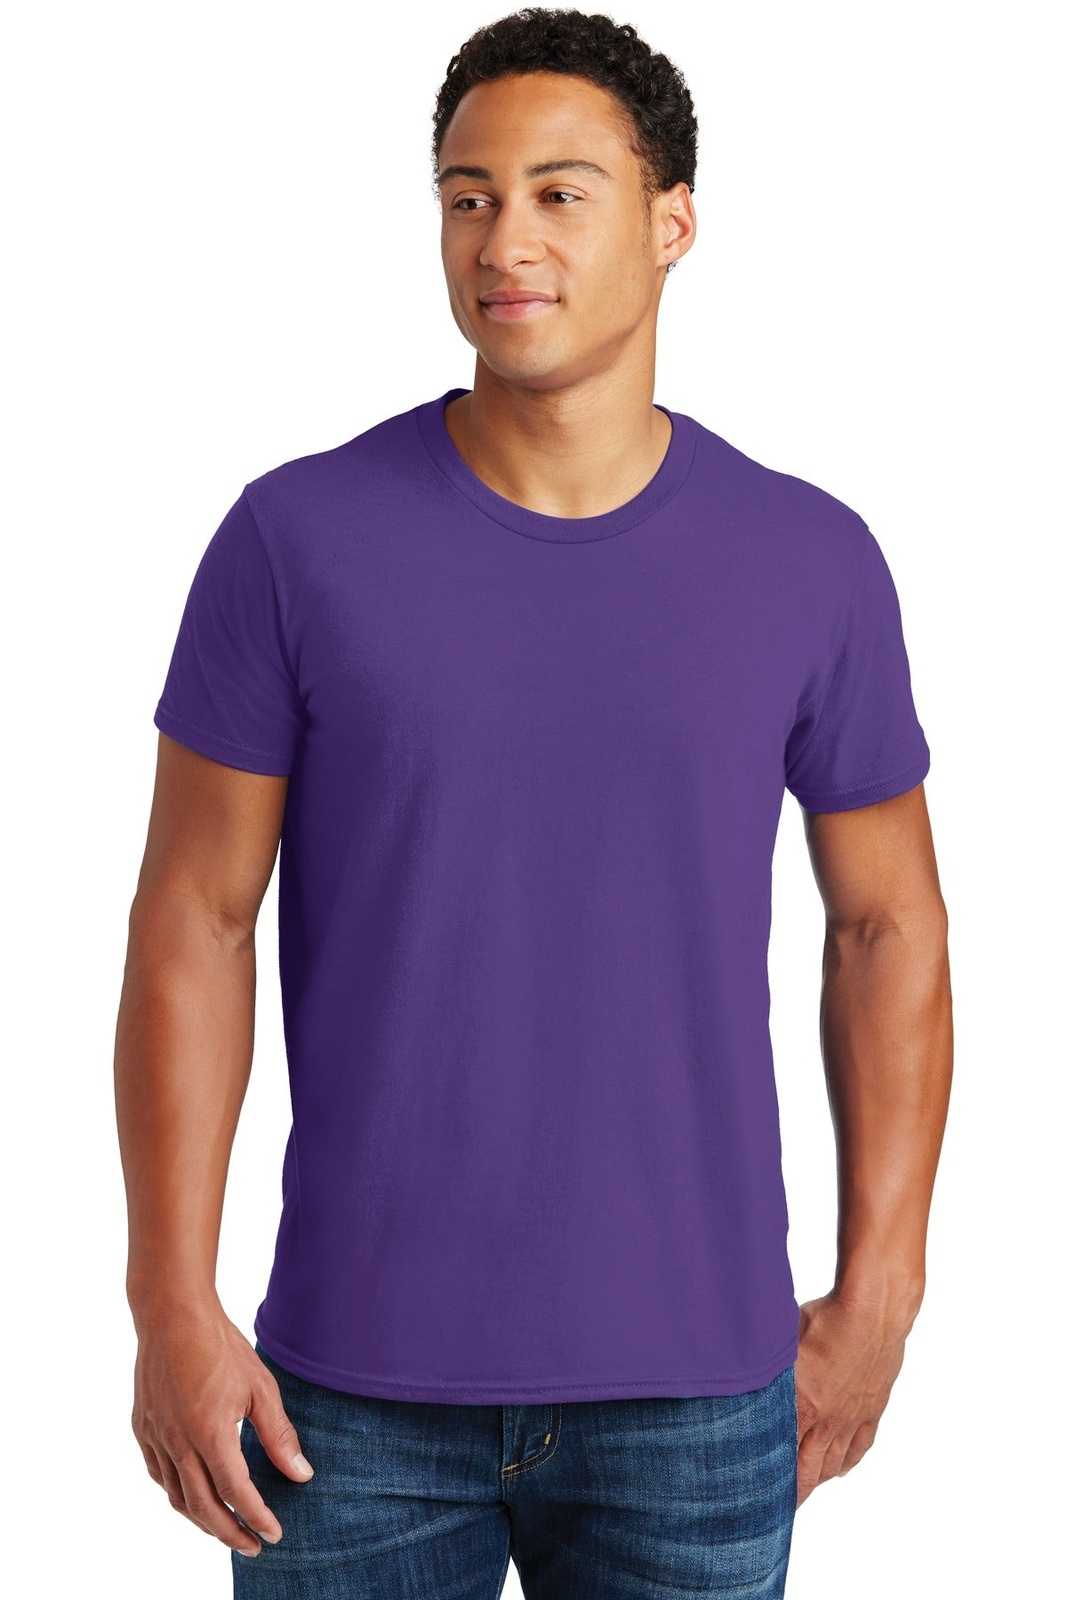 Hanes 4980 Perfect-T Cotton T-Shirt 